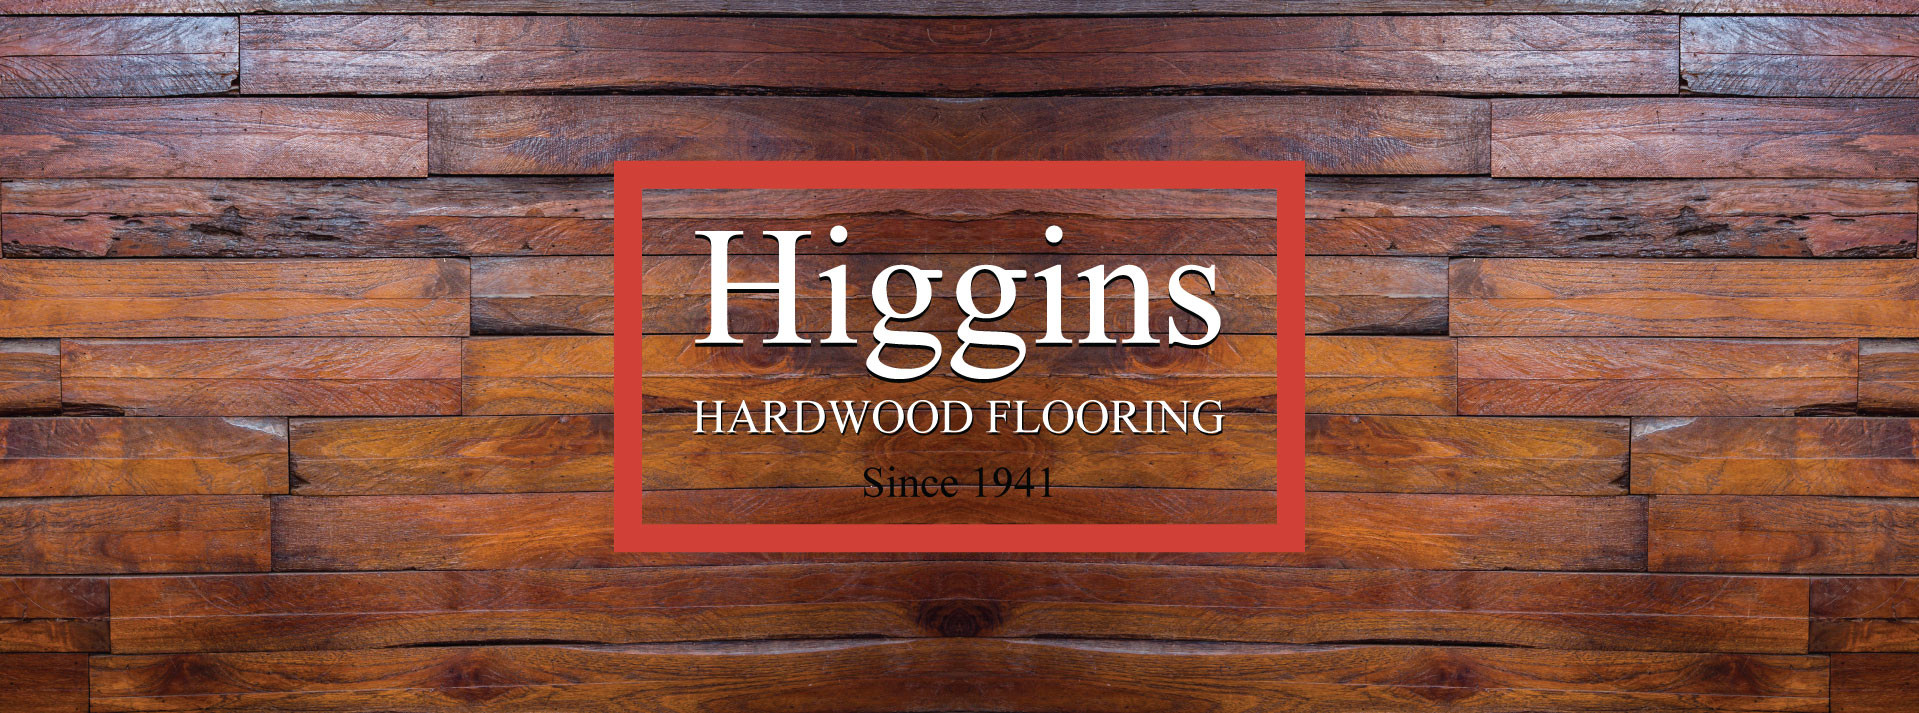 24 Fashionable Hardwood Flooring north York 2024 free download hardwood flooring north york of higgins hardwood flooring in peterborough oshawa lindsay ajax with regard to office hours